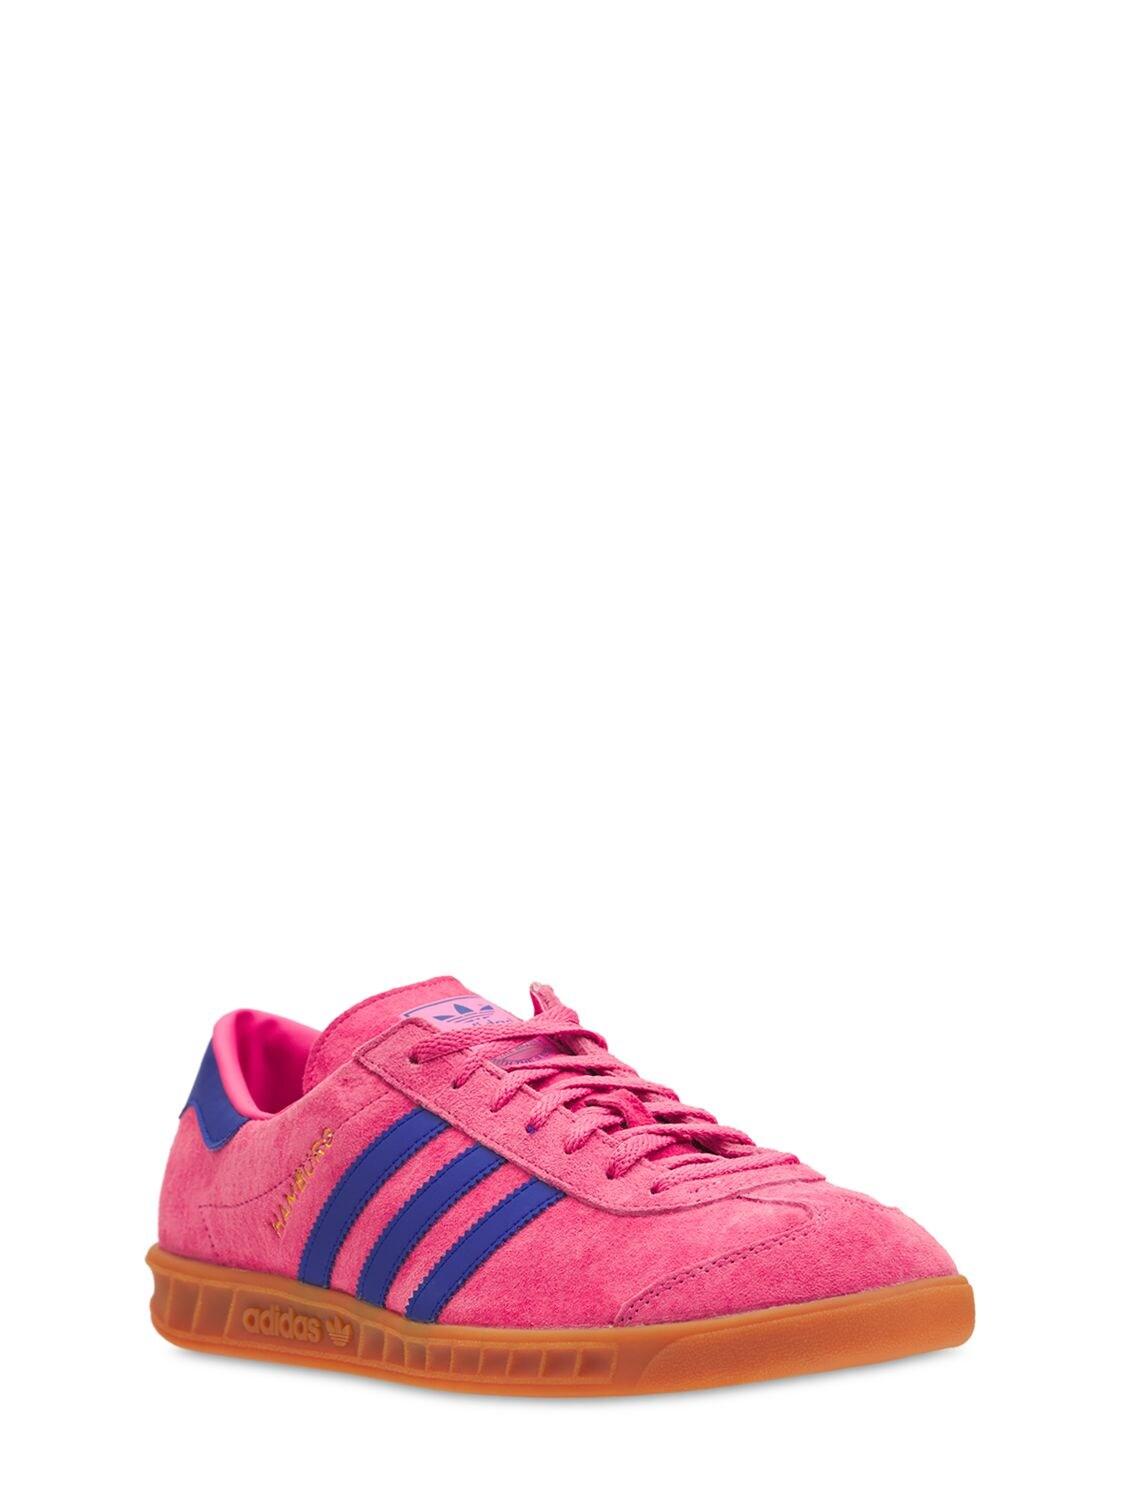 adidas Originals Hamburg Sneakers in Pink for Men | Lyst